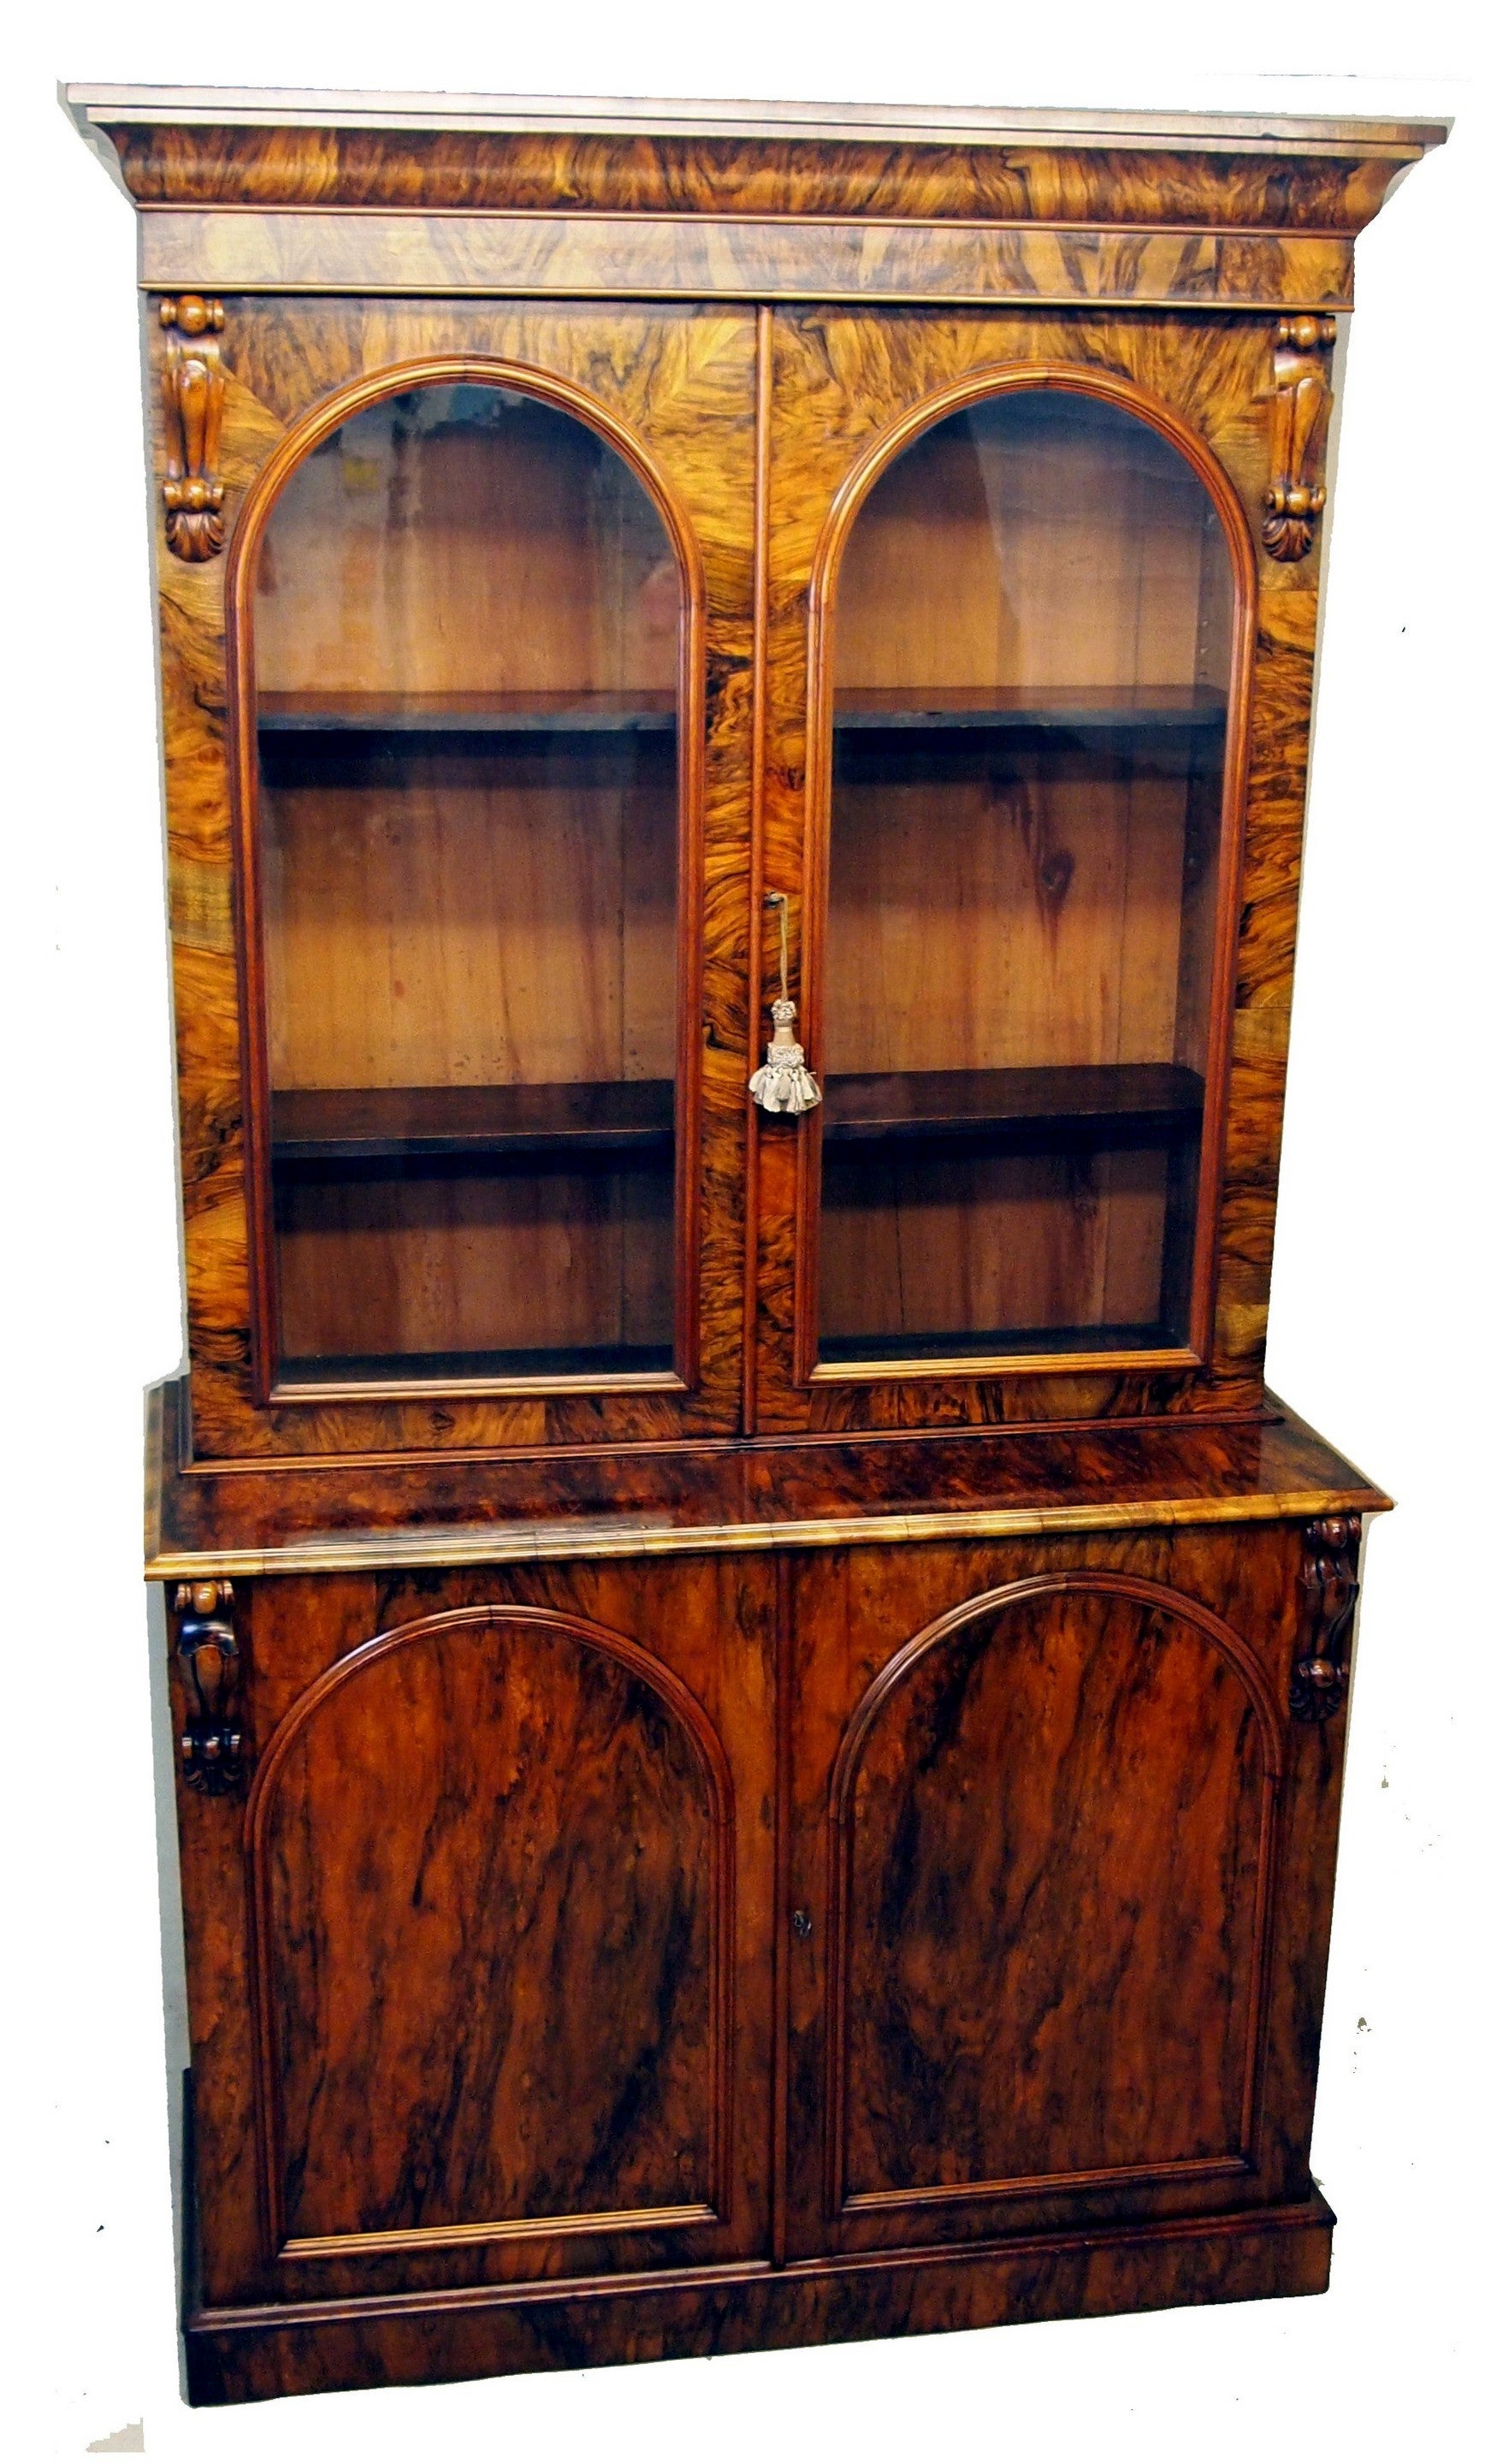 Victorian English Burr Walnut Library Bookcase Antique